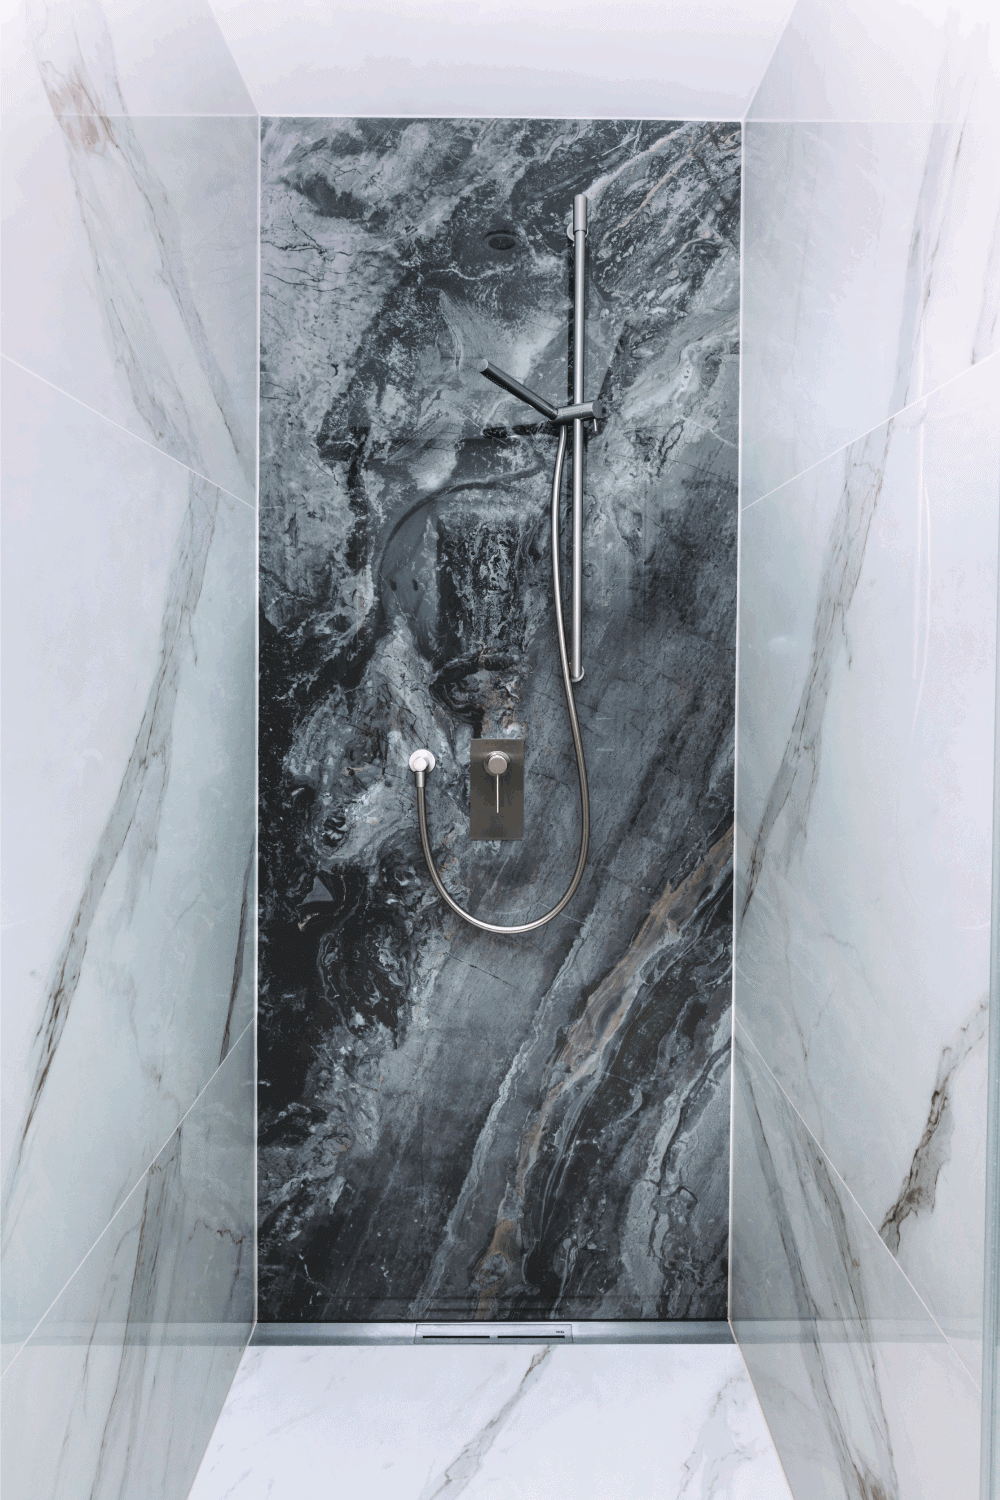 Linear shower drain in modern bathroom. Big marble tile format